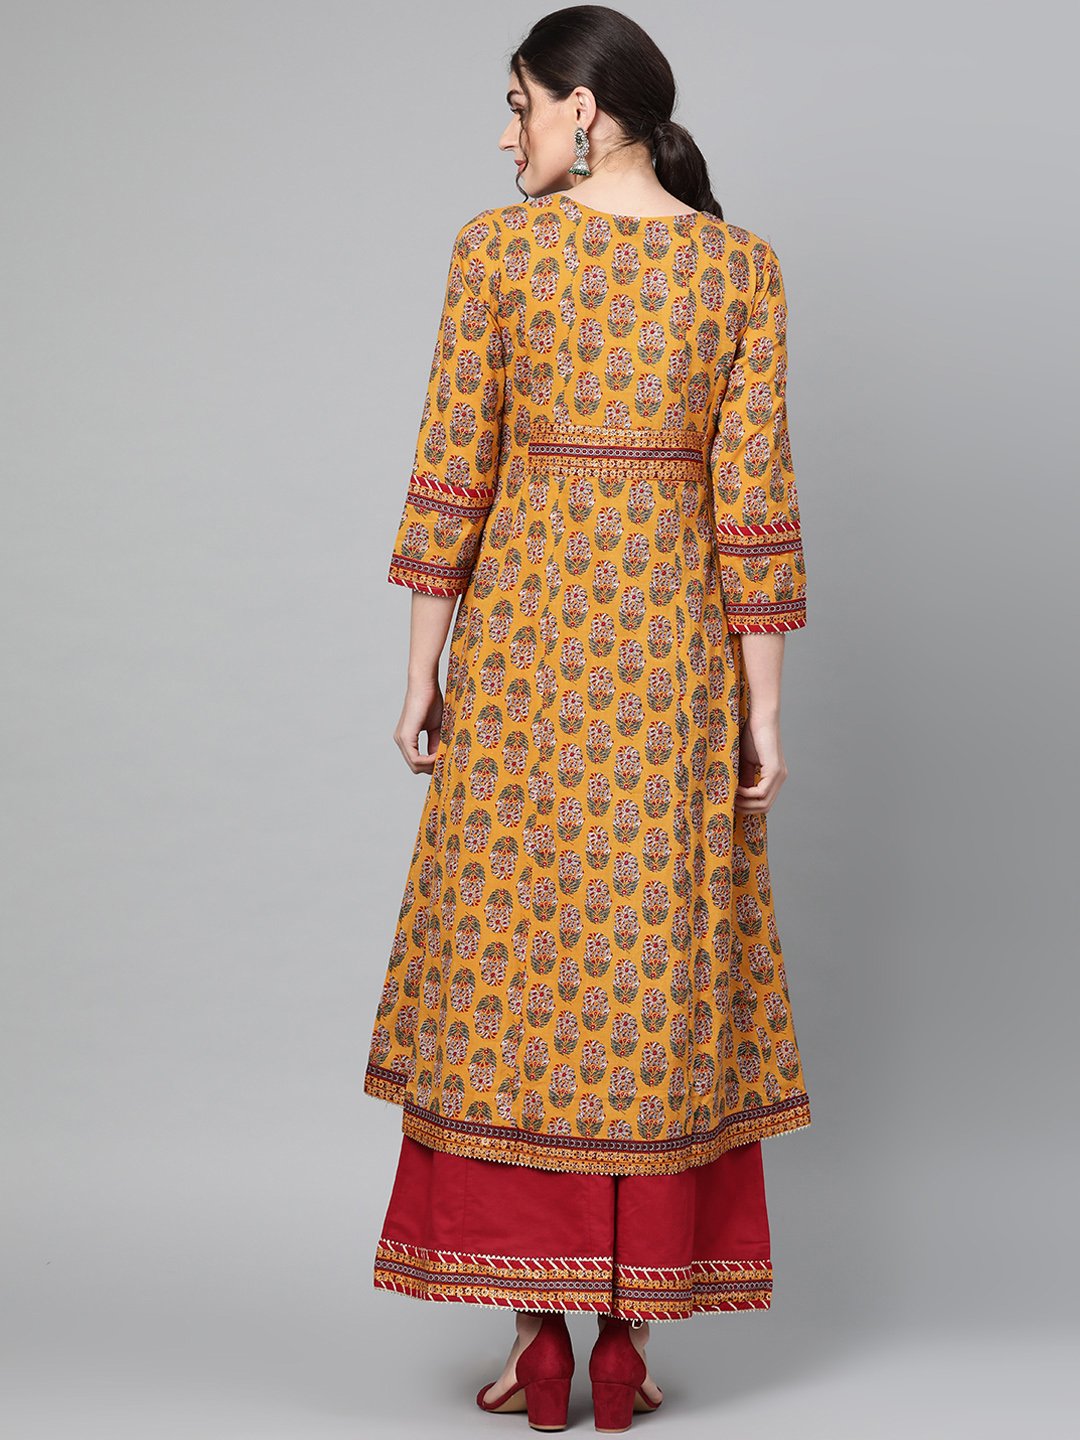 Ishin Women's Cotton Mustard Yellow & Maroon Printed With Gota Patti Anarkali Kurta Palazzo Set